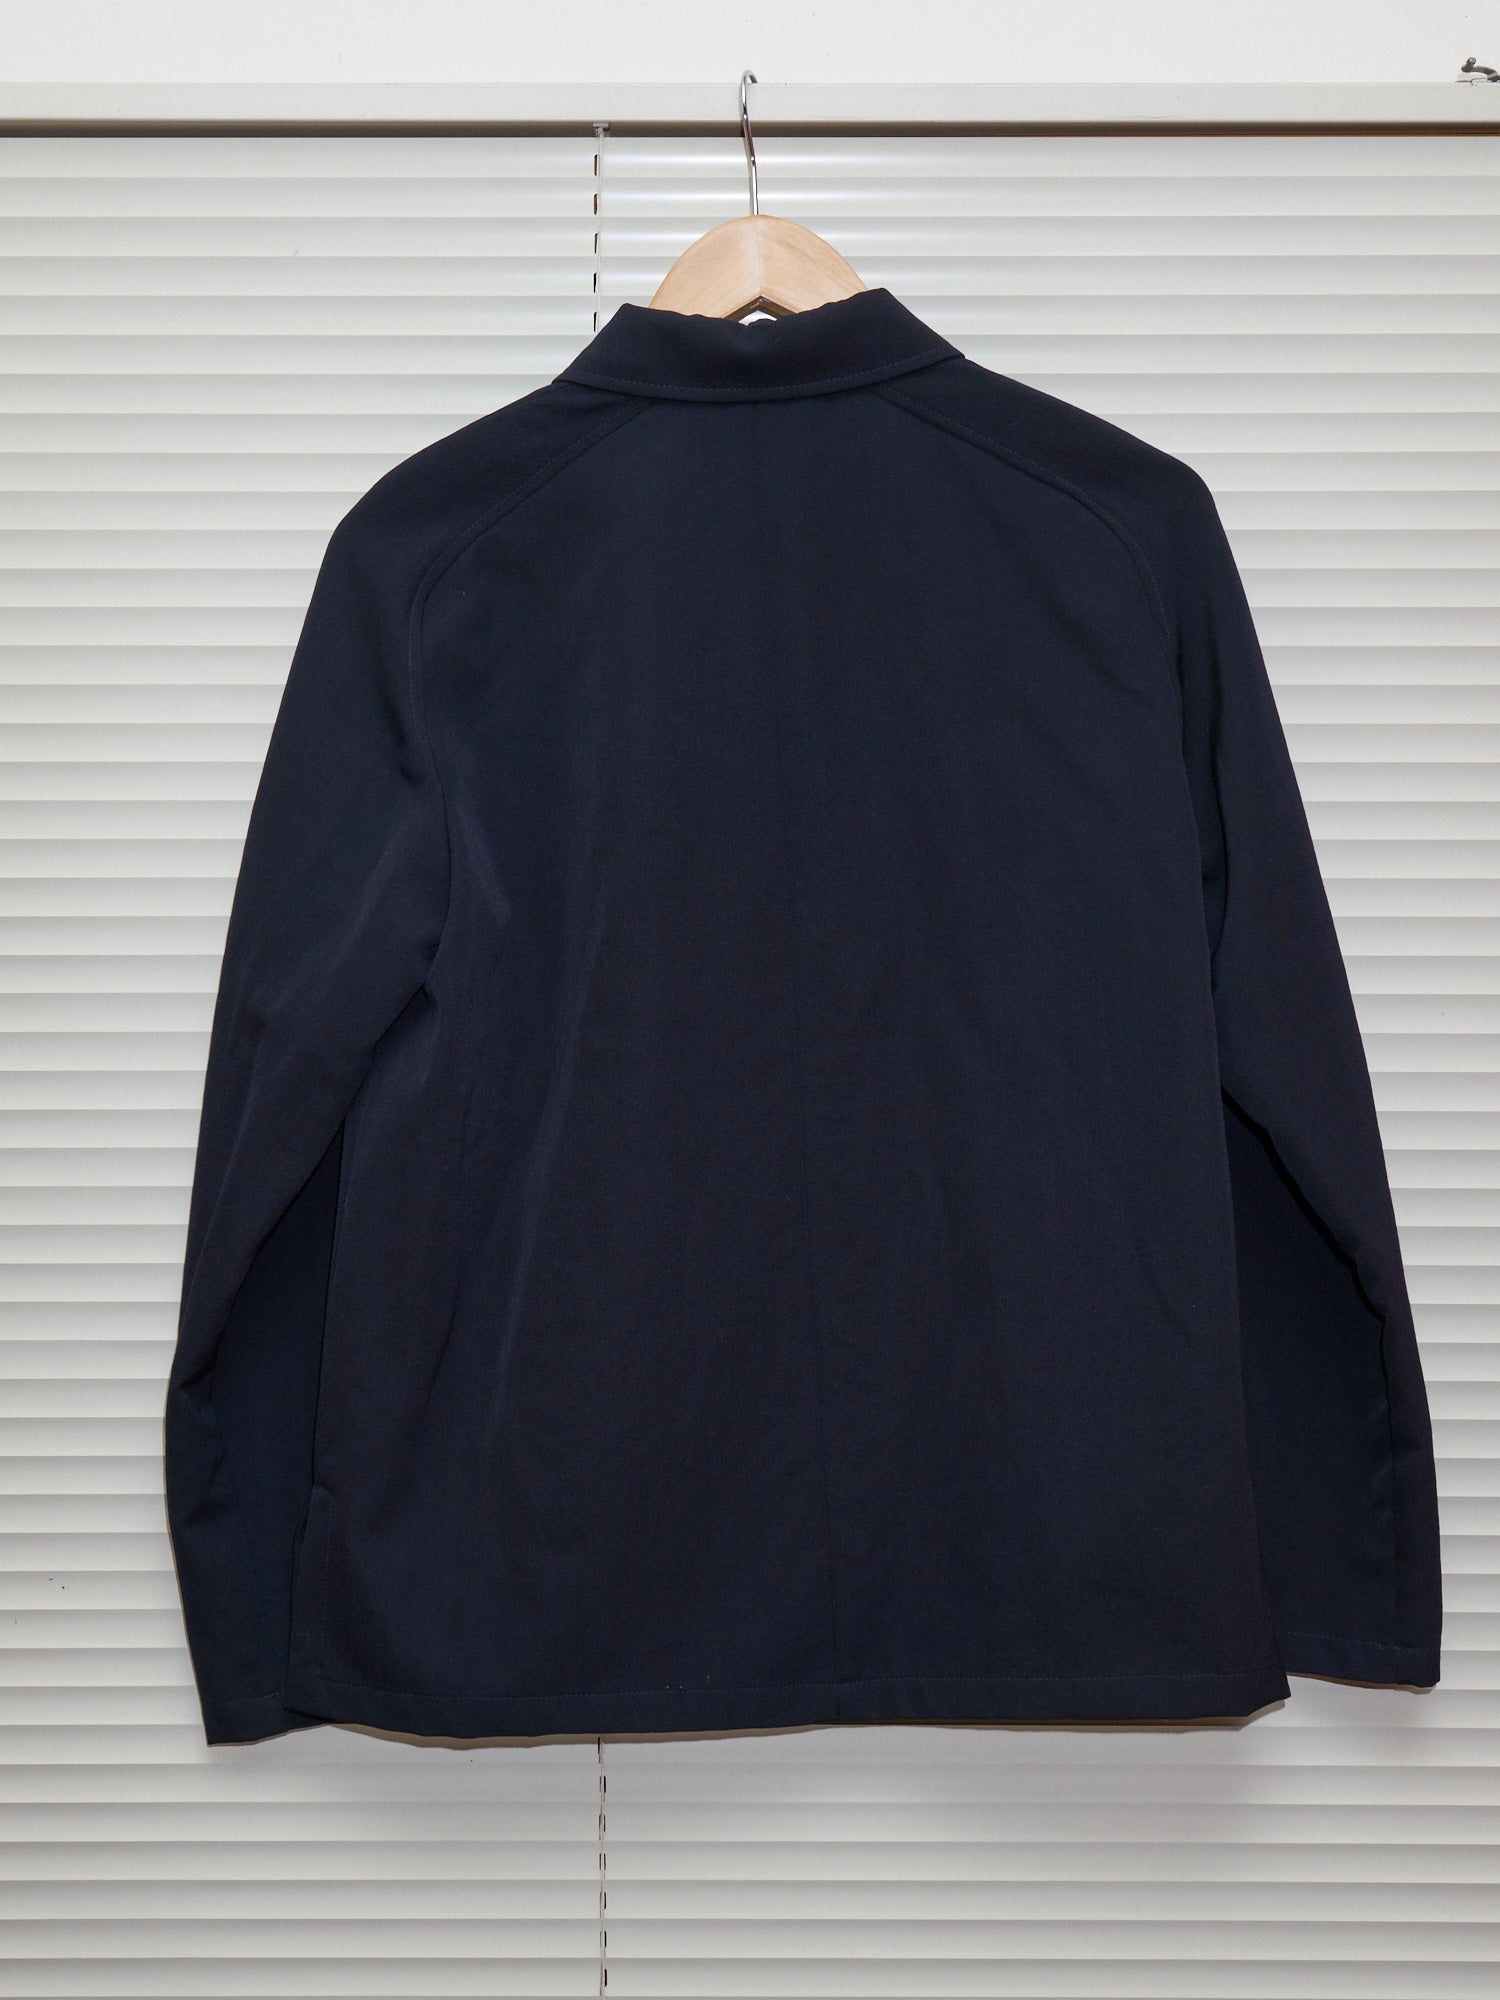 Max Mara Weekend Line 1990s dark navy wool gabardine jacket - womens size 10